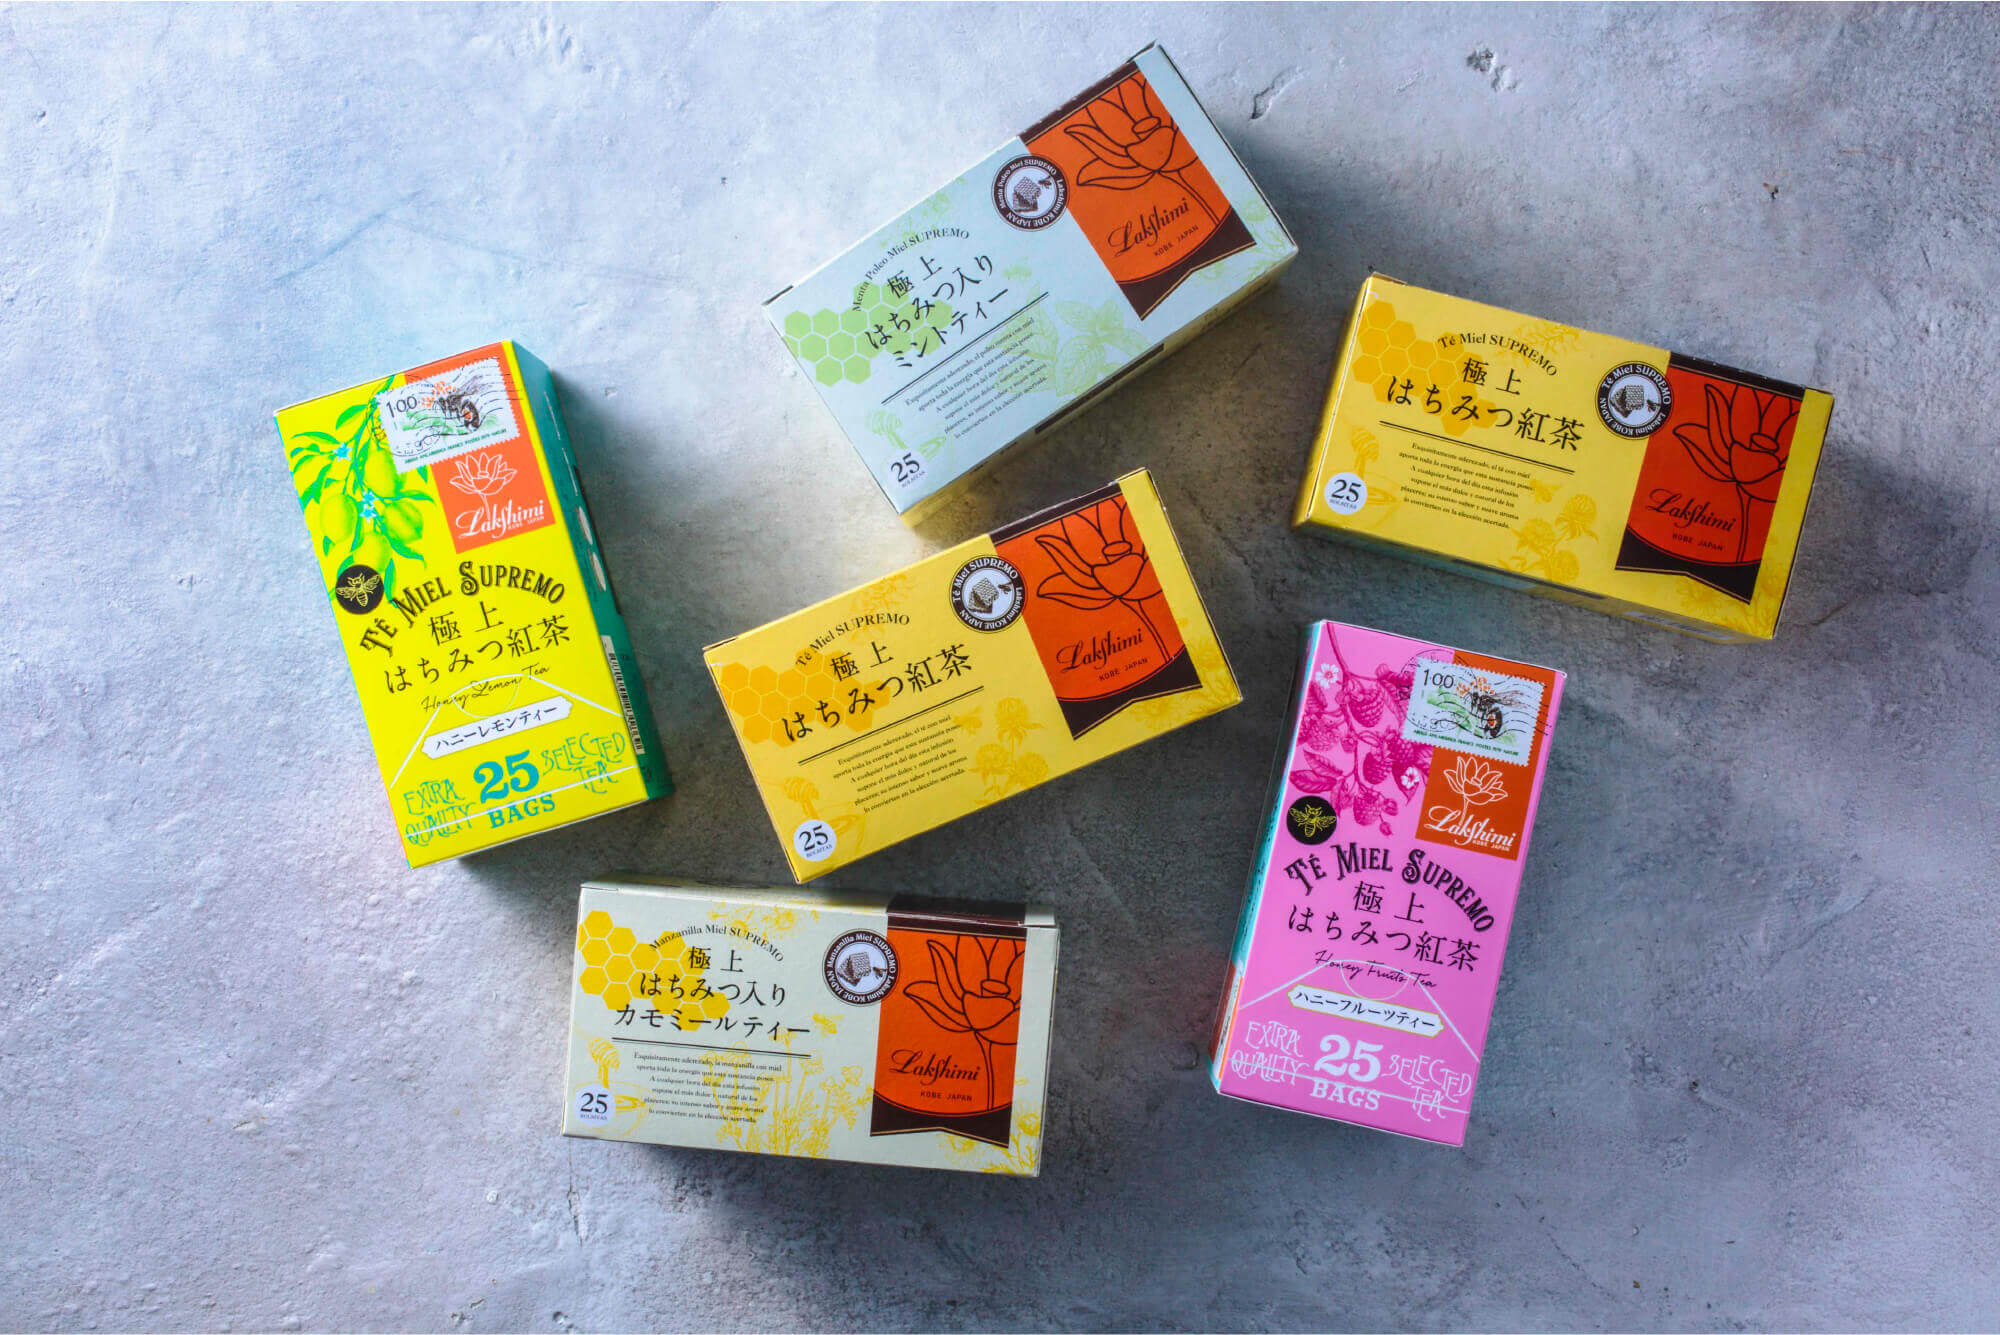 Premium Honey Tea Series product package